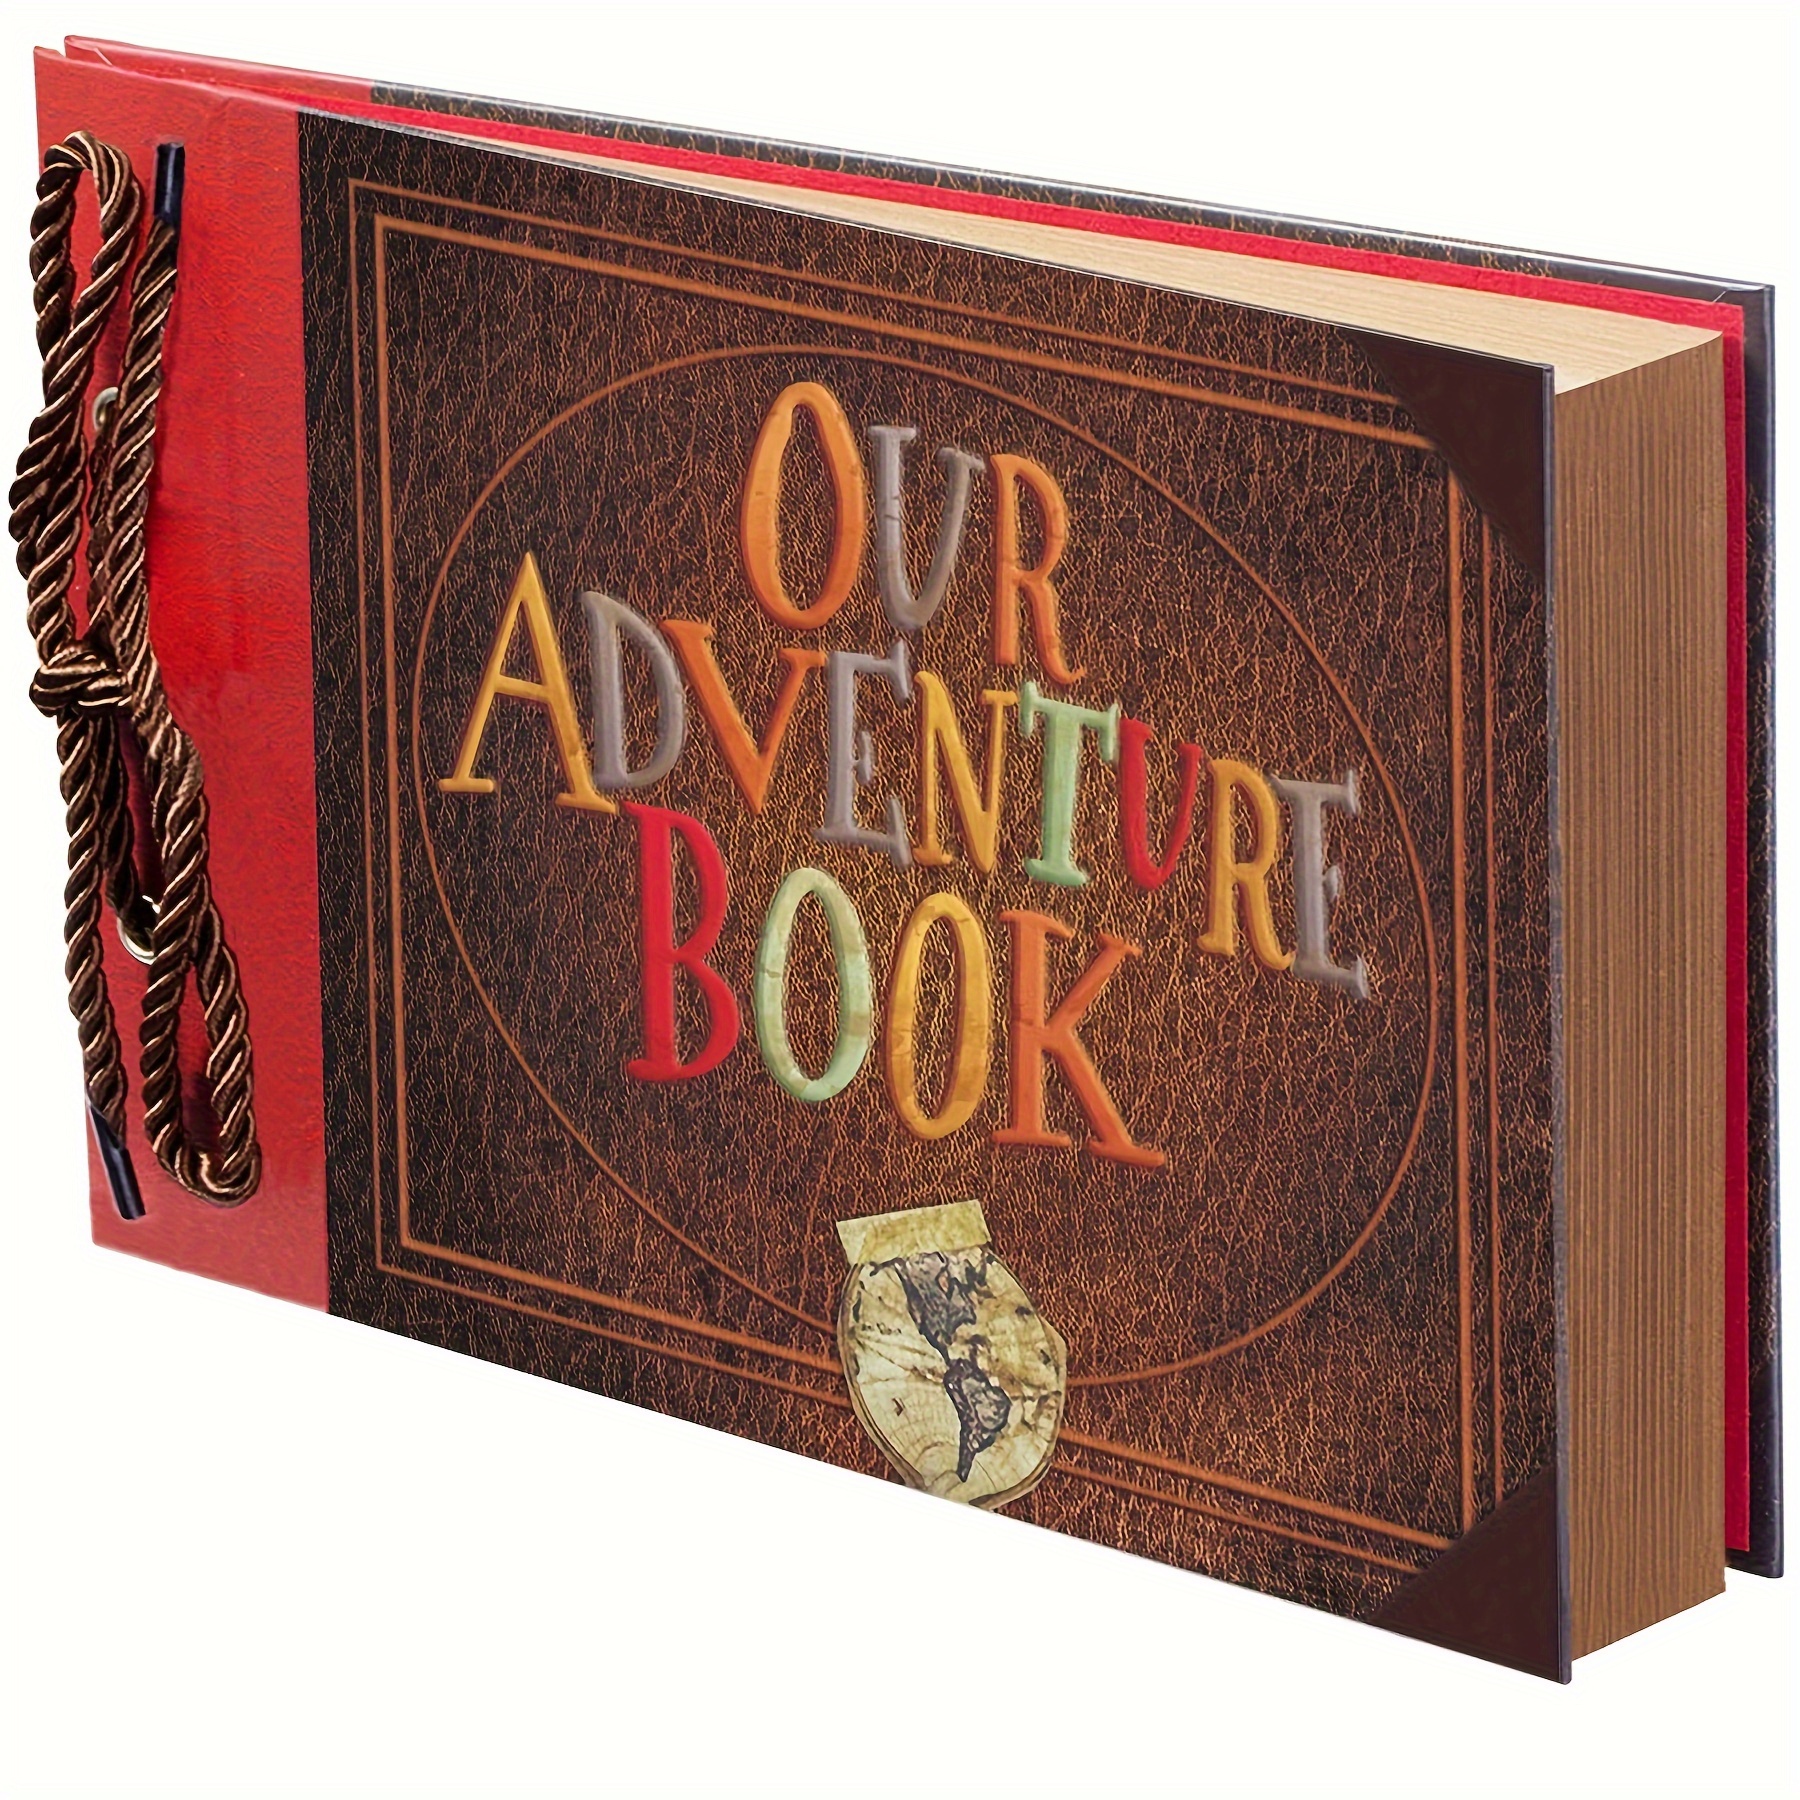 Our My Adventure Book Album Vintage Handmade Pixar DIY Travel